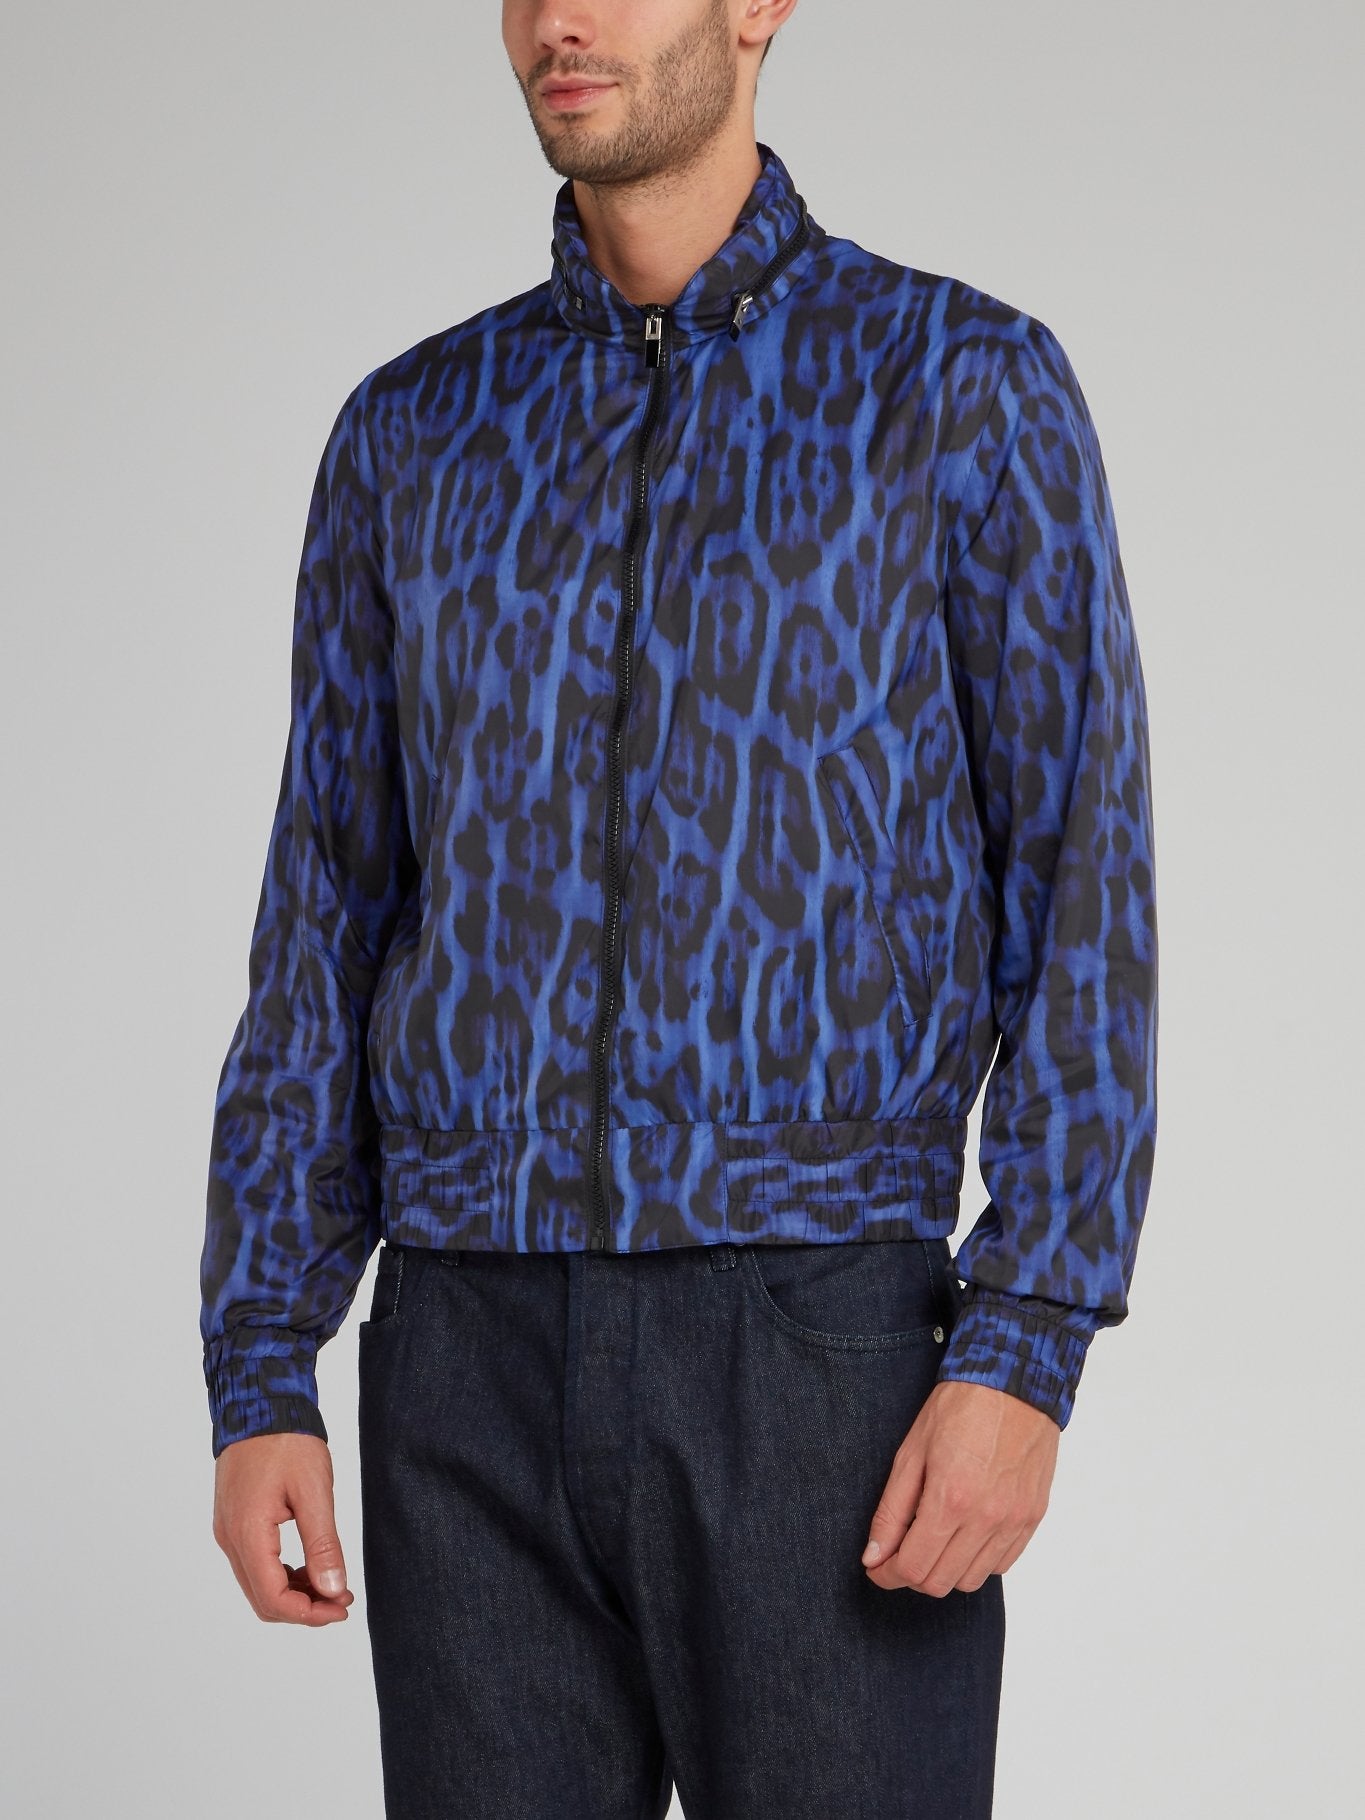 Blue Leopard Print Jacquard Zip Up Jacket